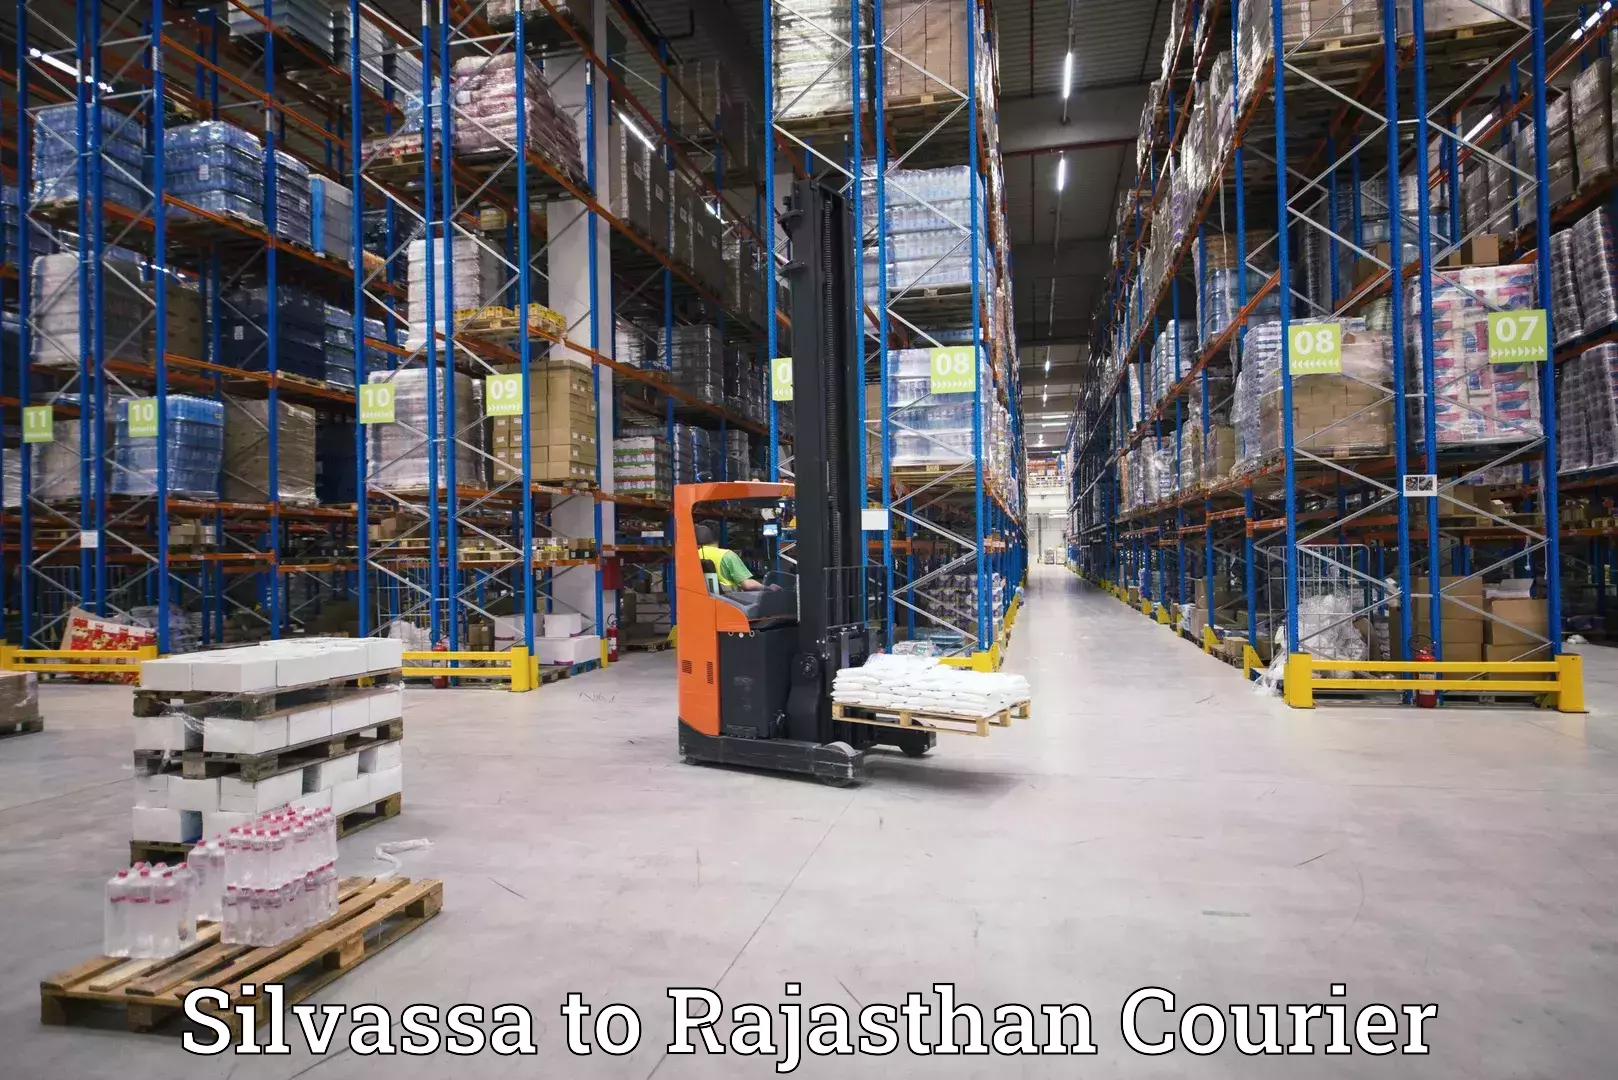 Nationwide shipping capabilities Silvassa to Jaipur